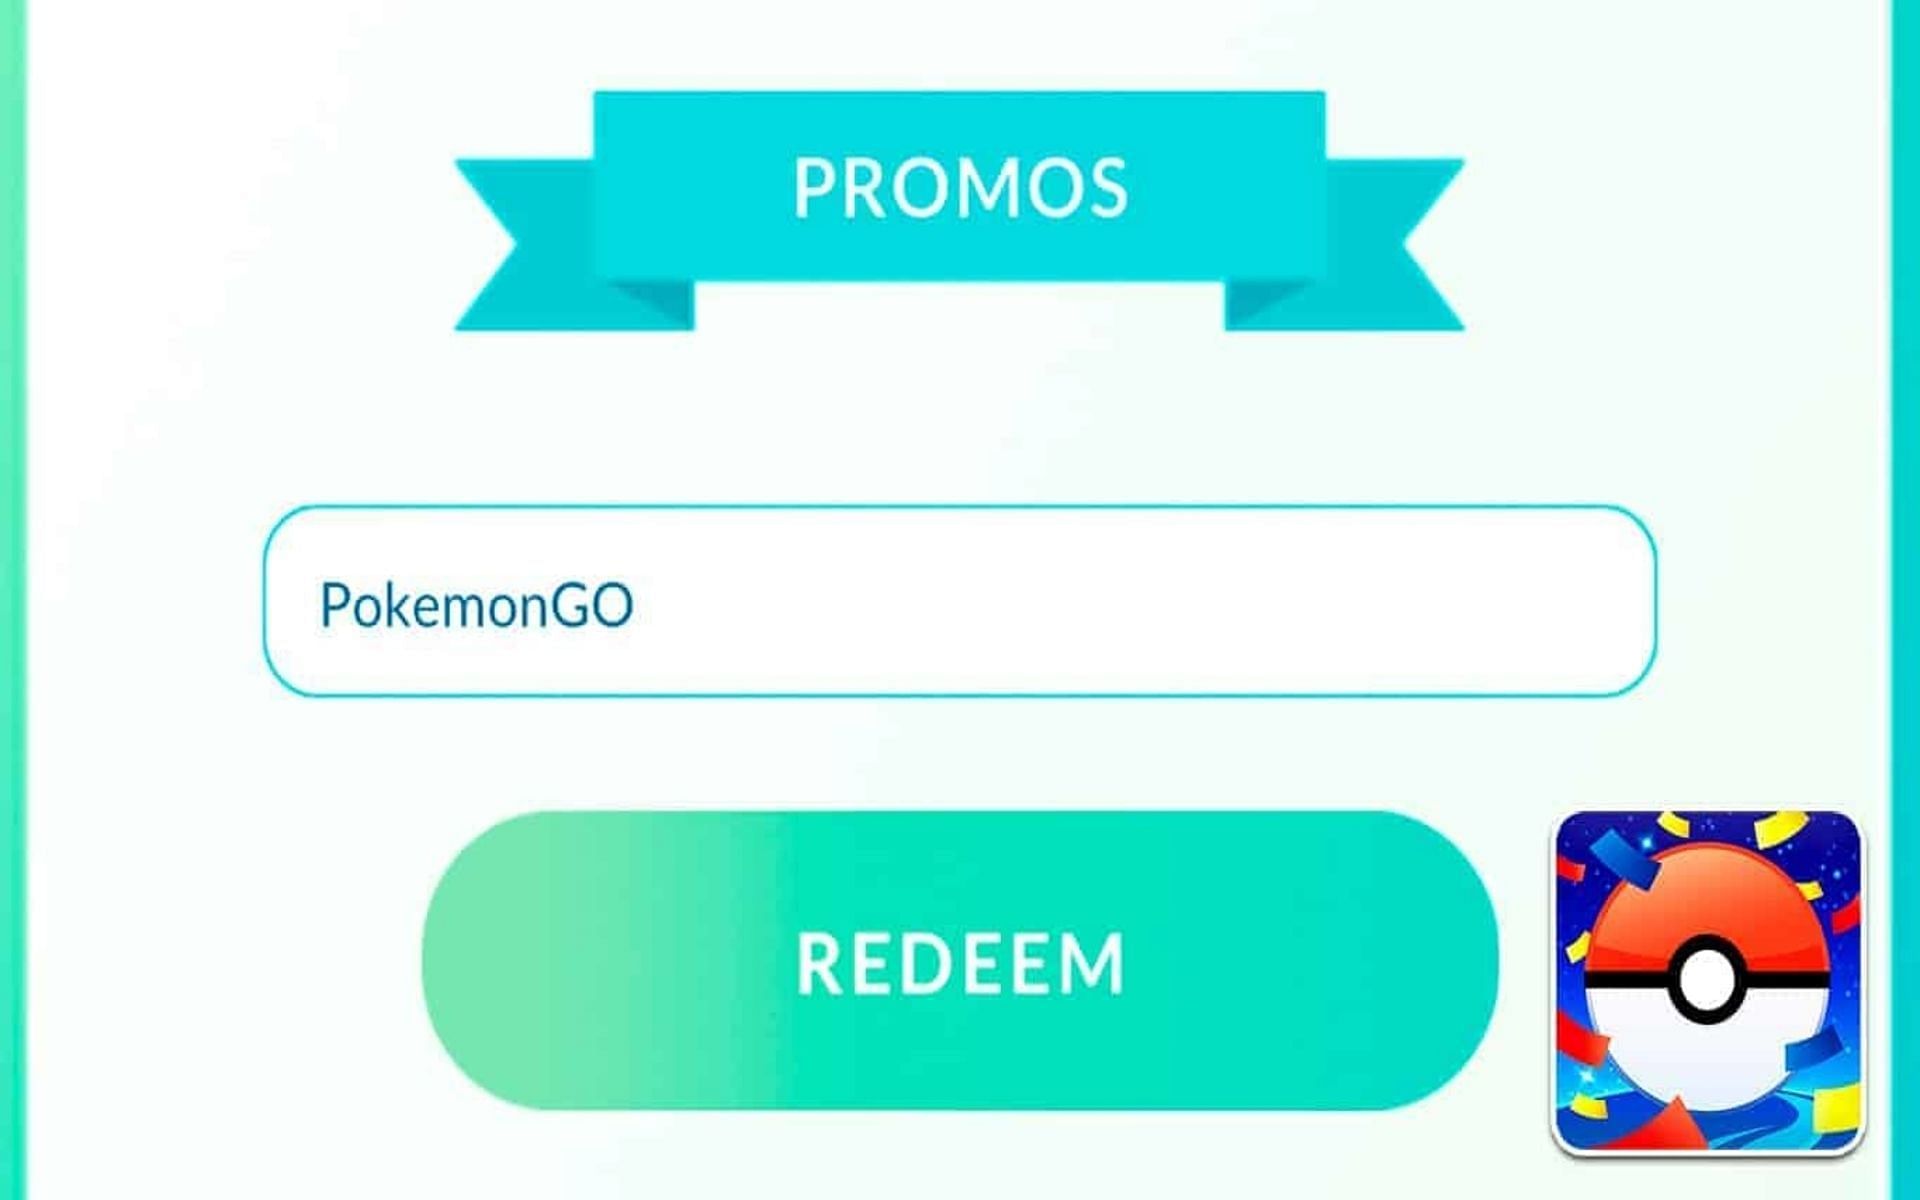 How to redeem codes in Pokemon GO